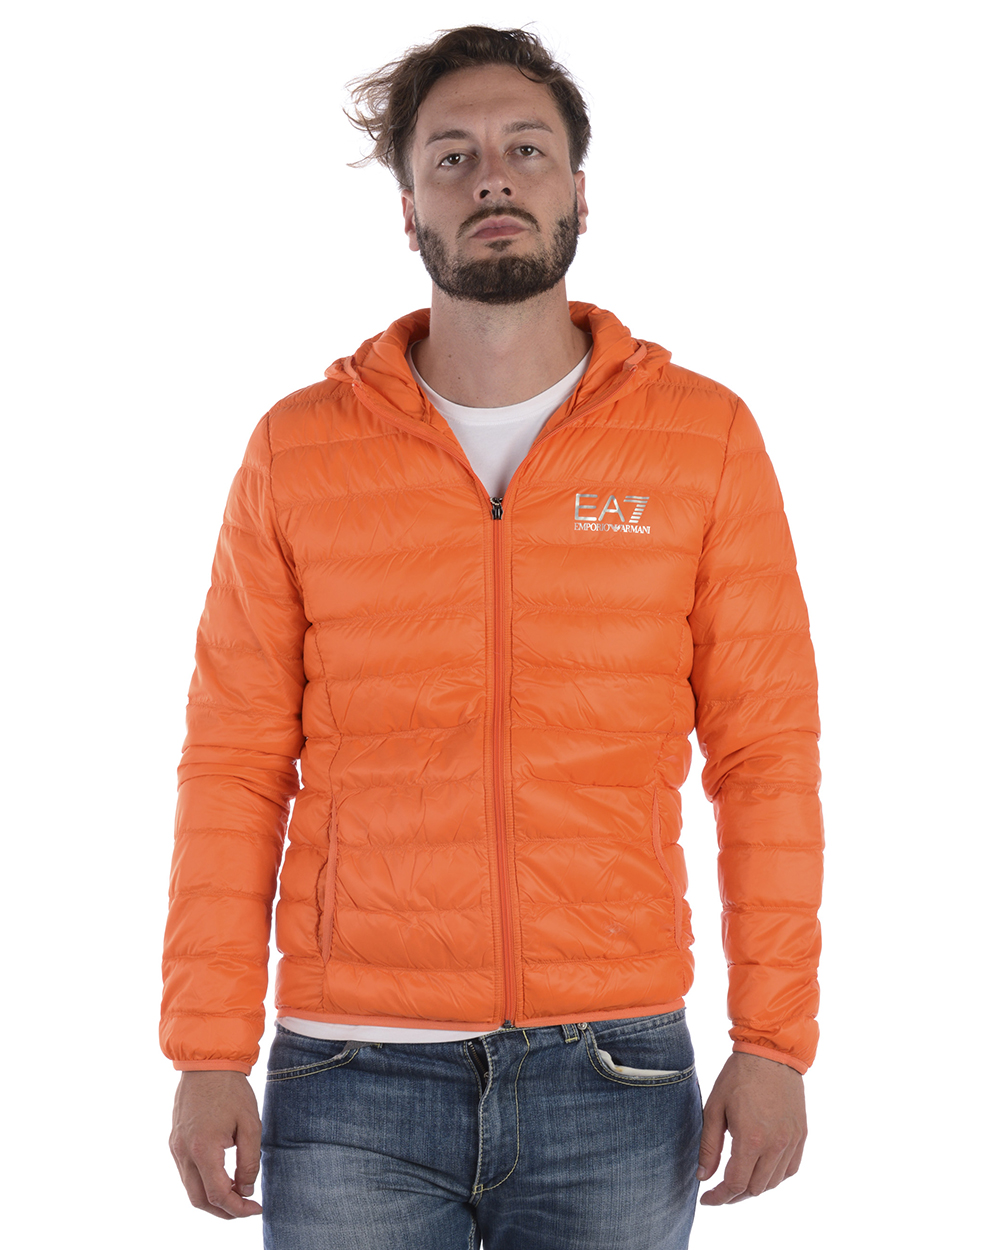 armani orange jacket